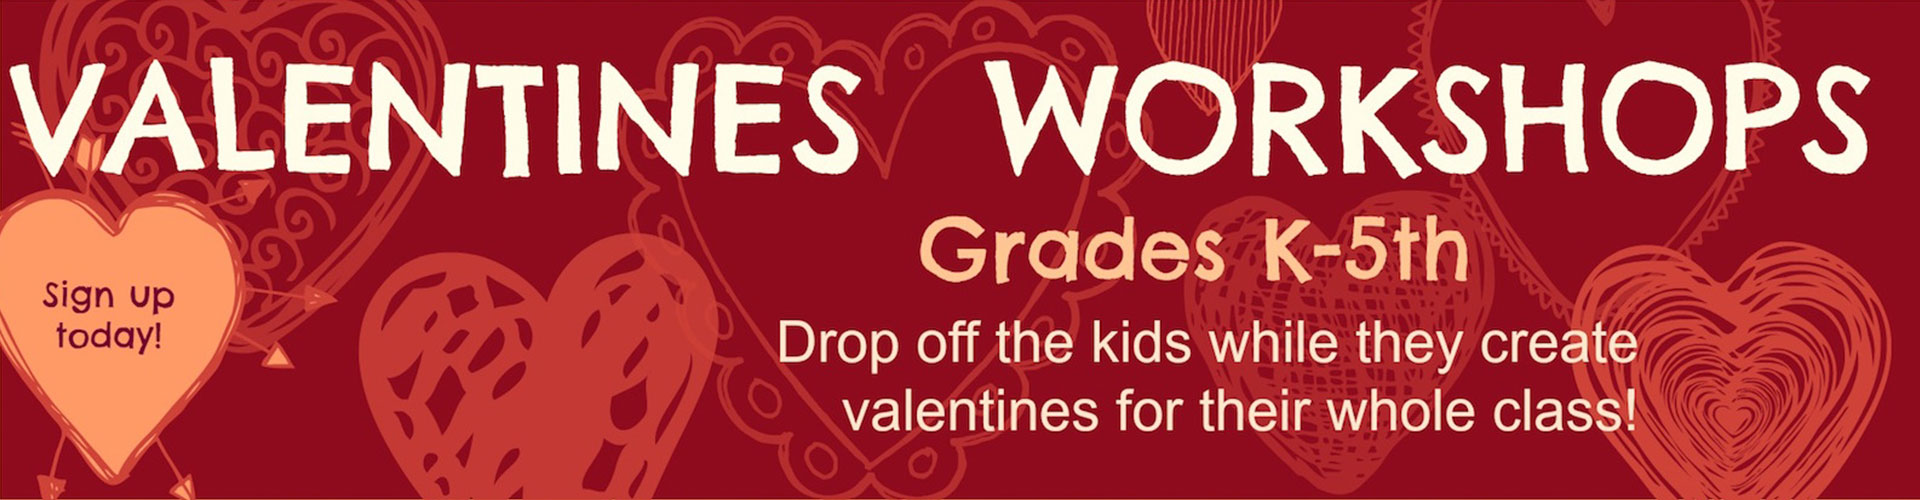 Thumbprint Valentines Workshops, Grades K-5th